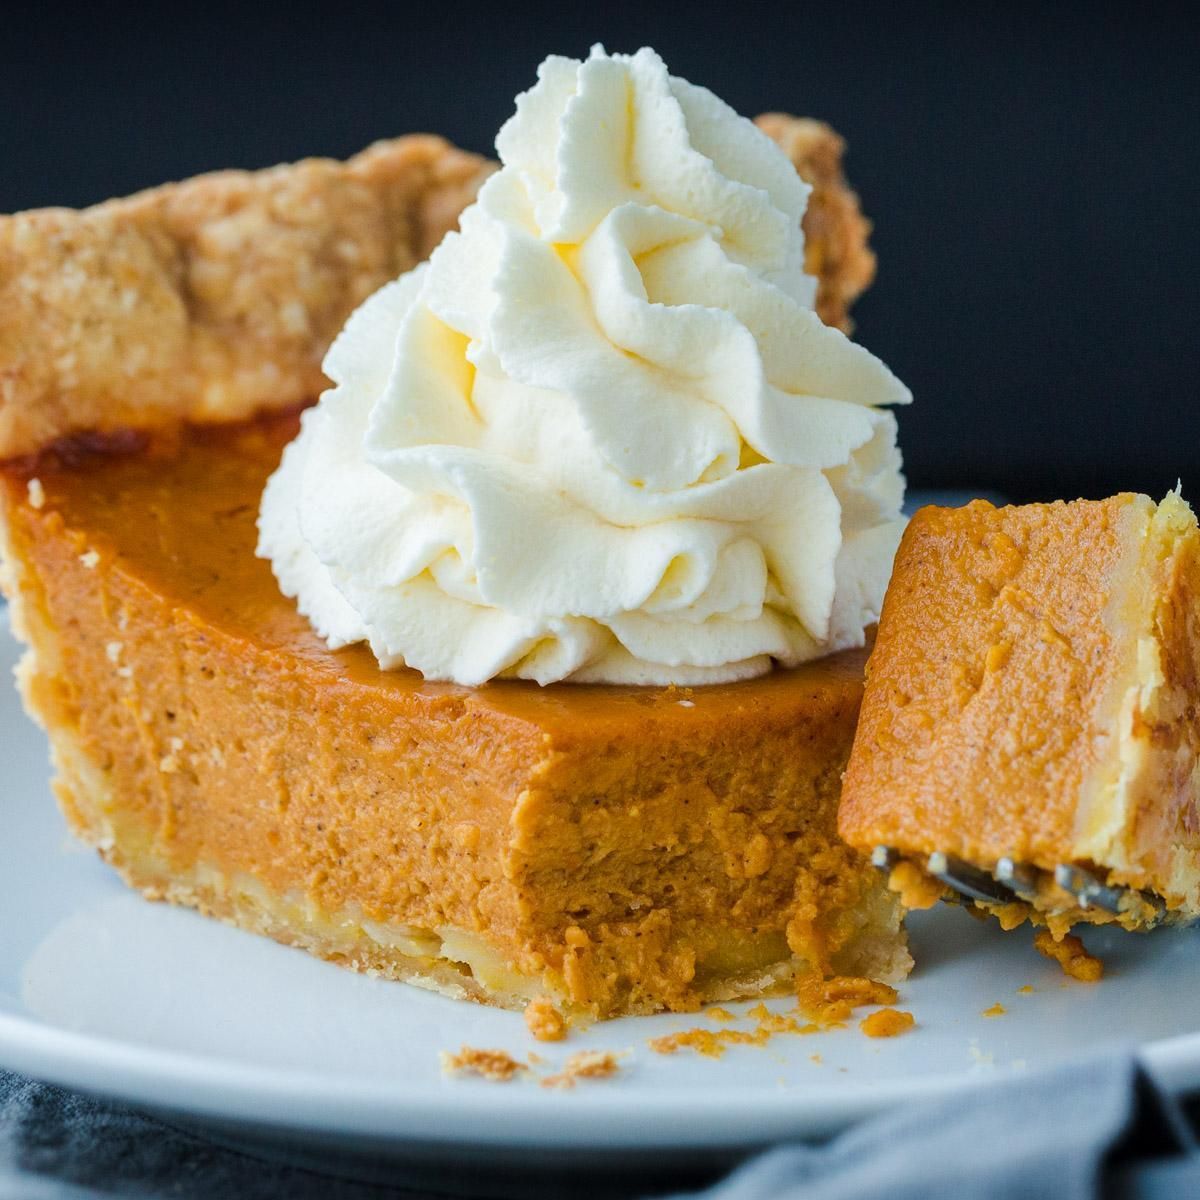 25 pumpkin pie recipe homemade videos ideas